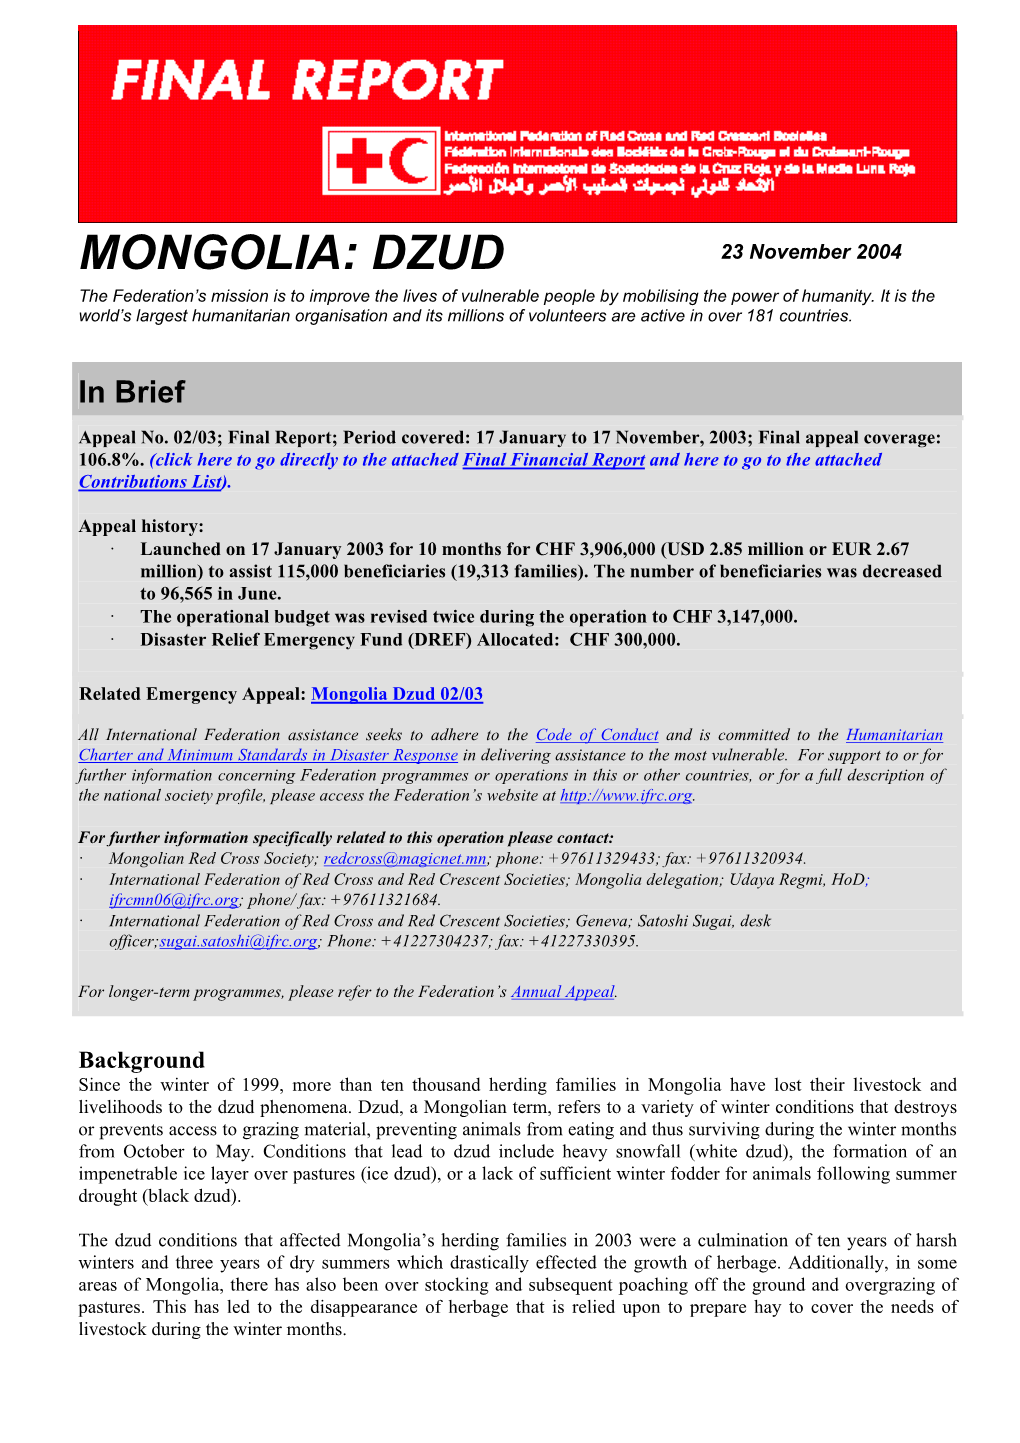 Mongolia Dzud 02/03